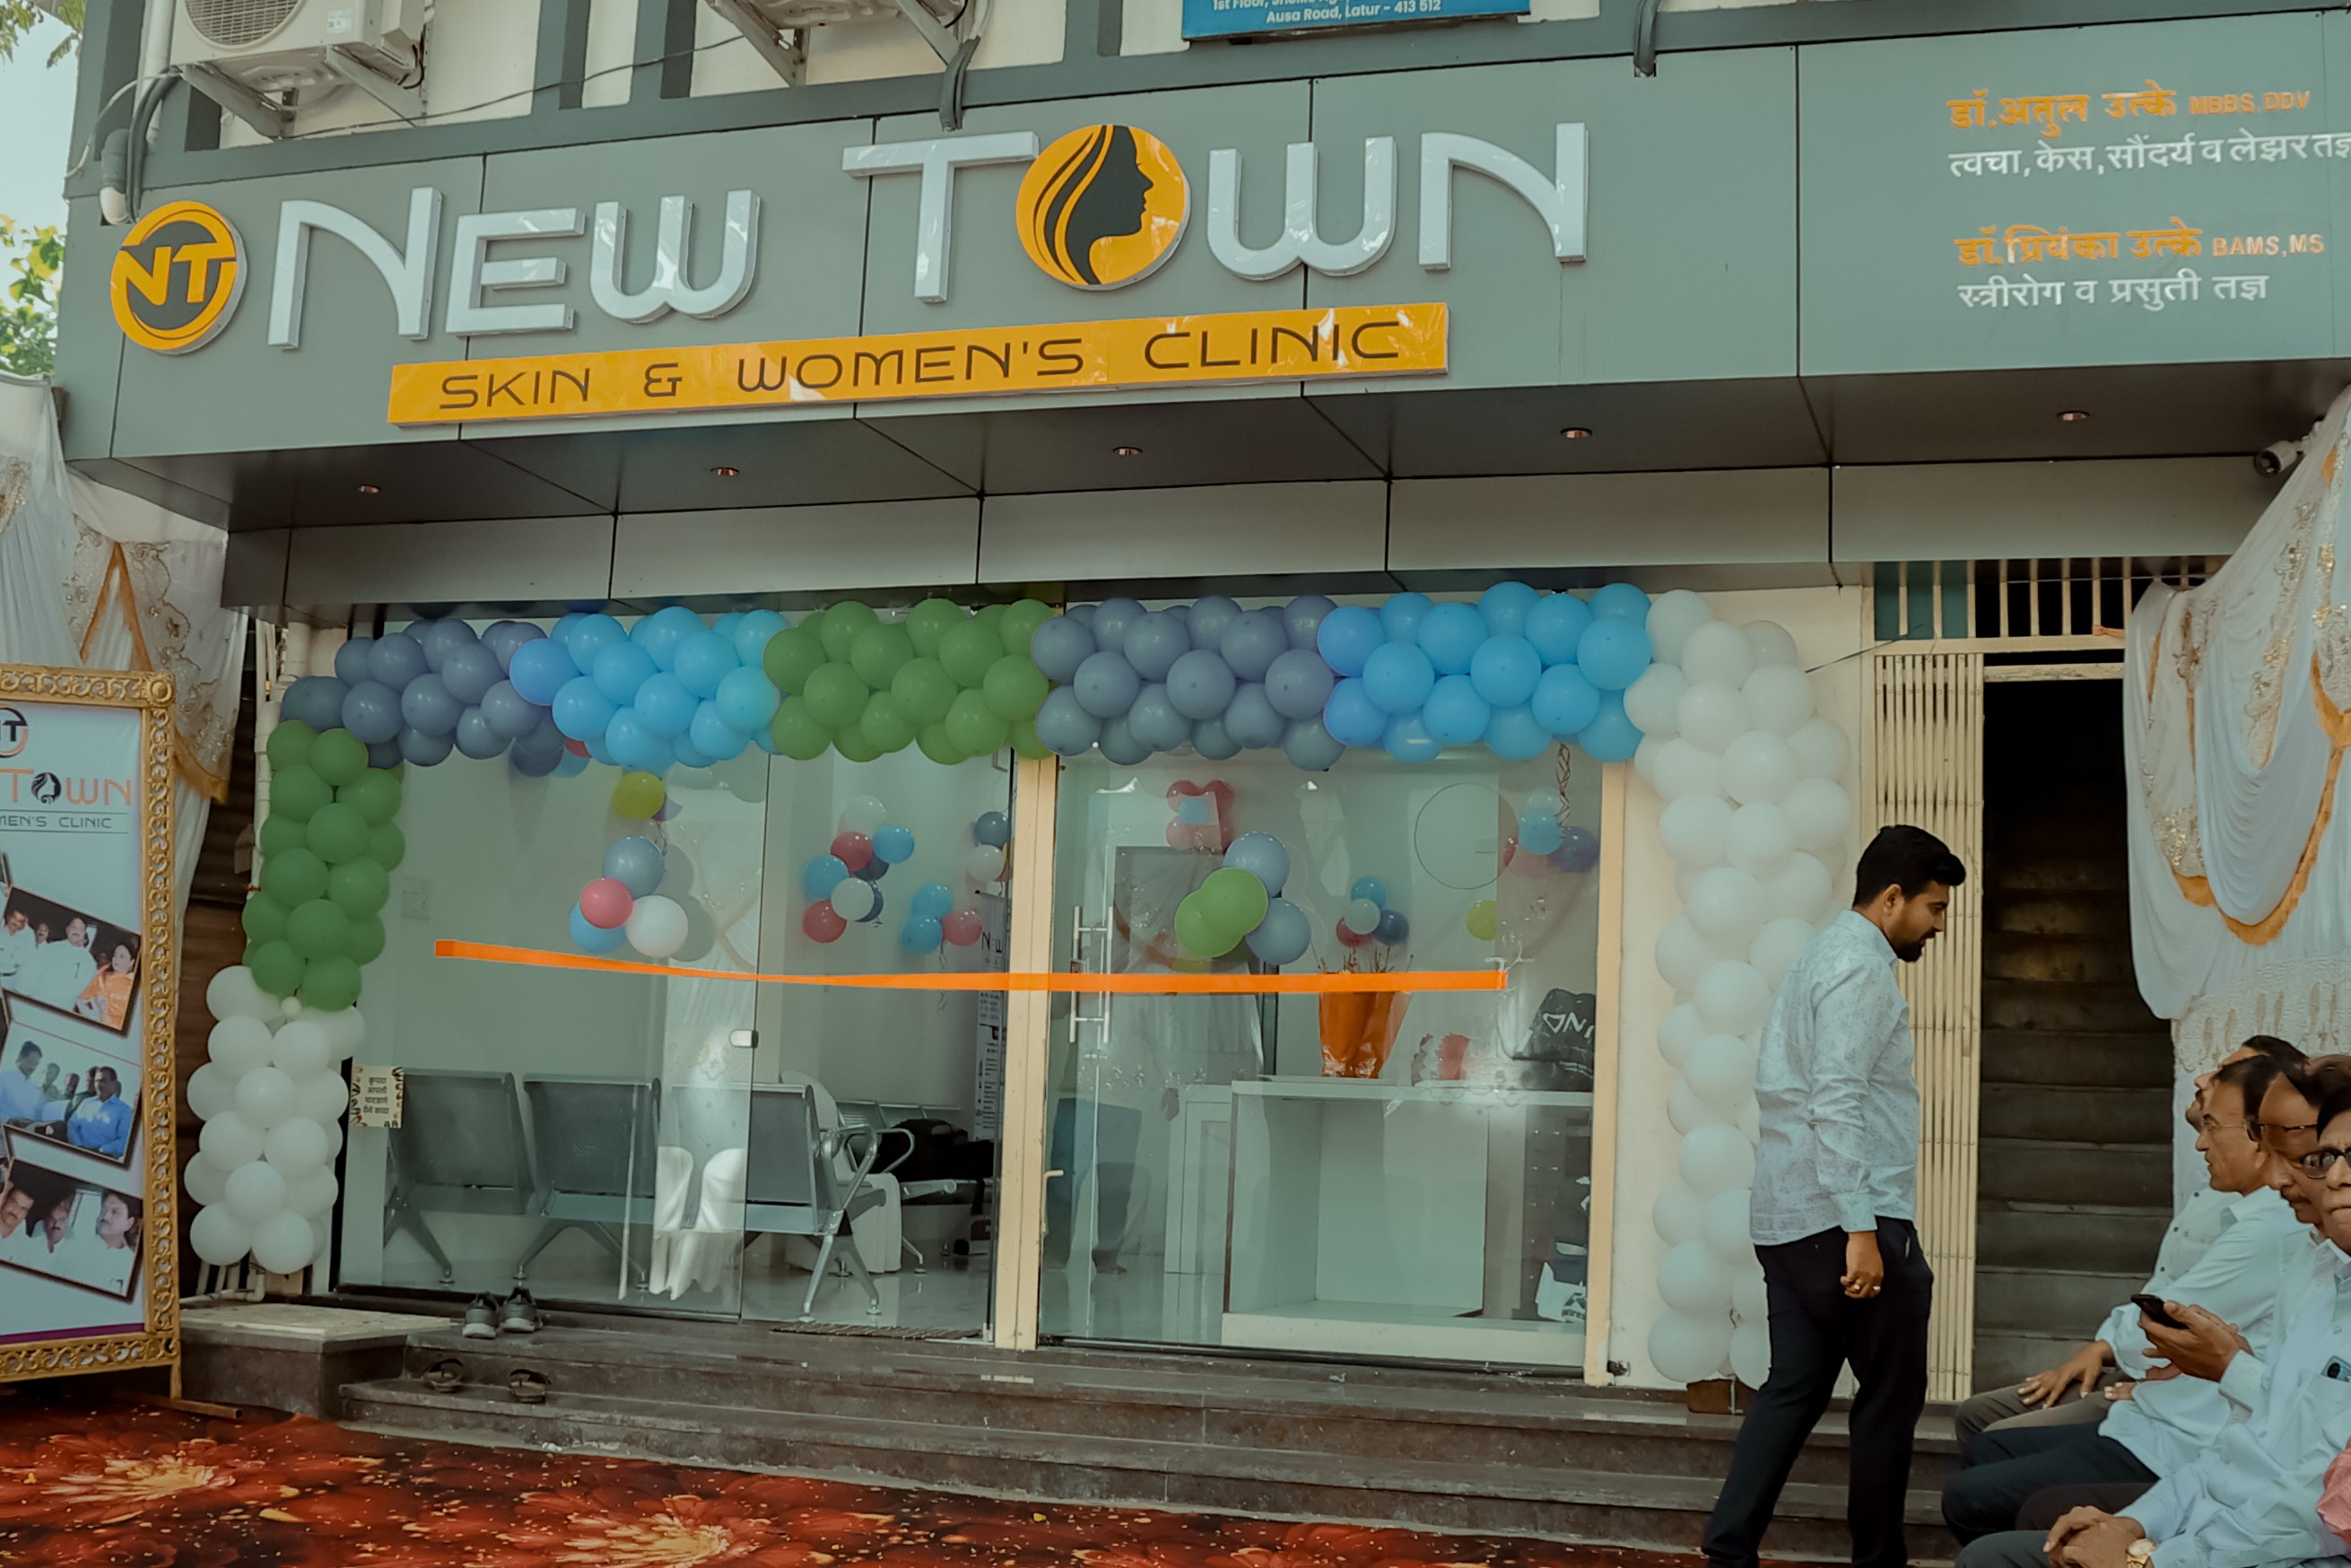 New Town Skin & Women's Clinic - 193